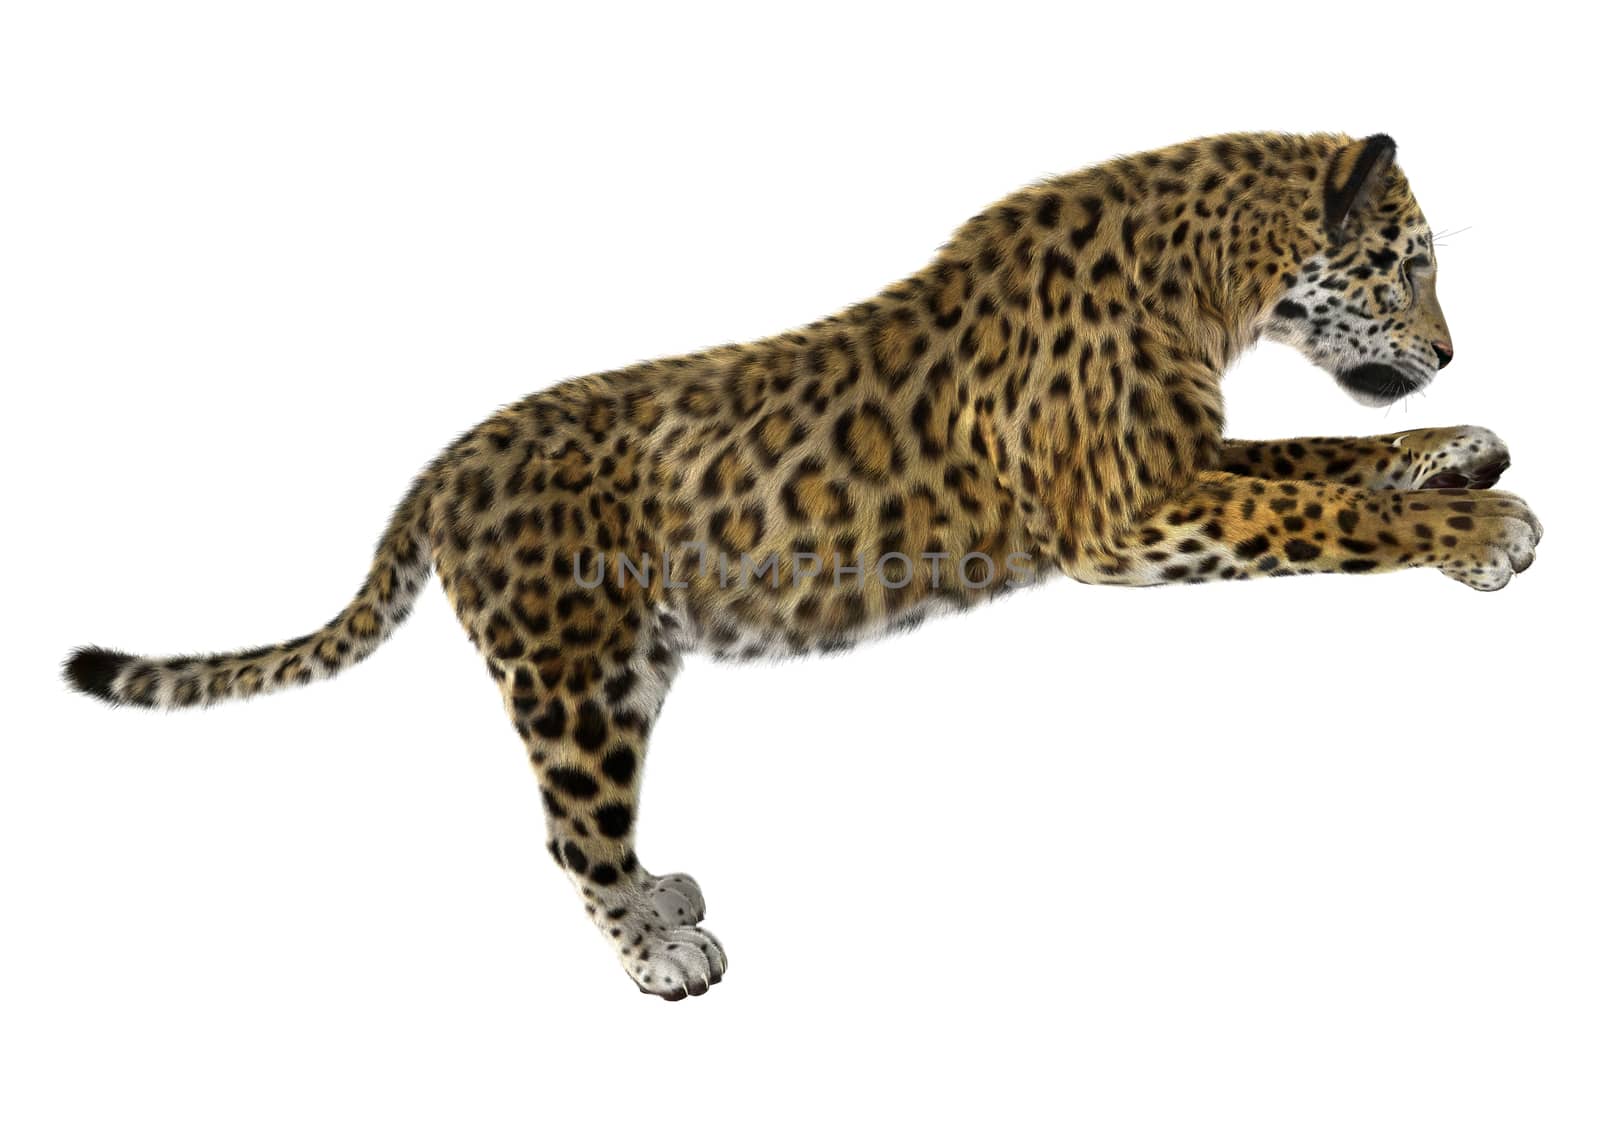 3D digital render of a big cat jaguar iisolated on white background